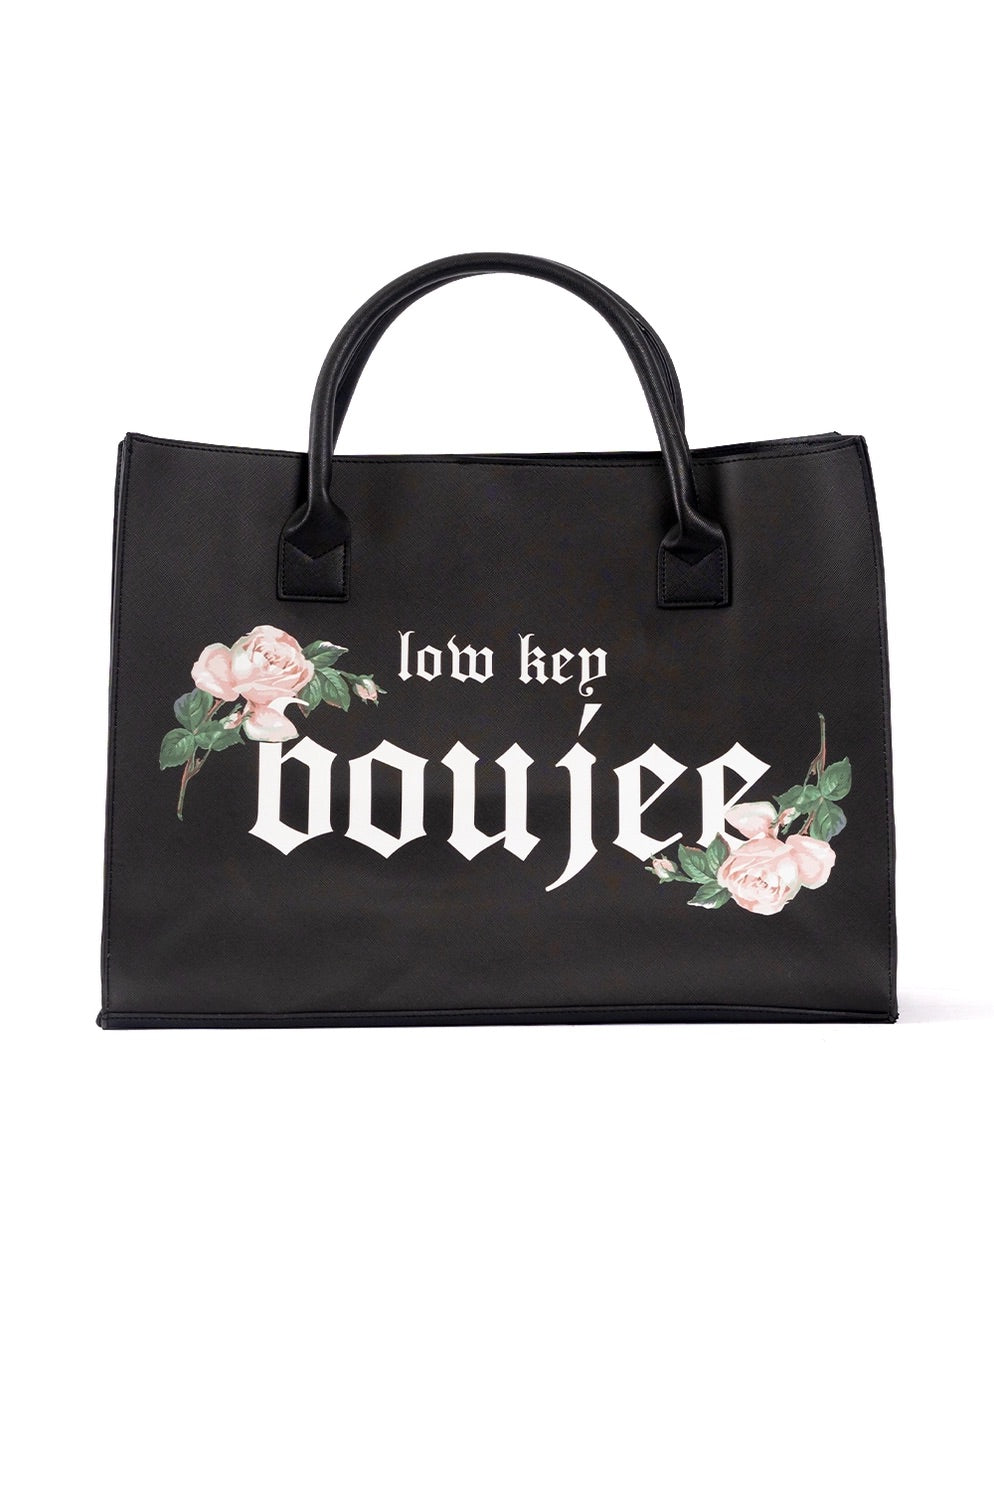 Low Key Boujee Tote Bag (Black)